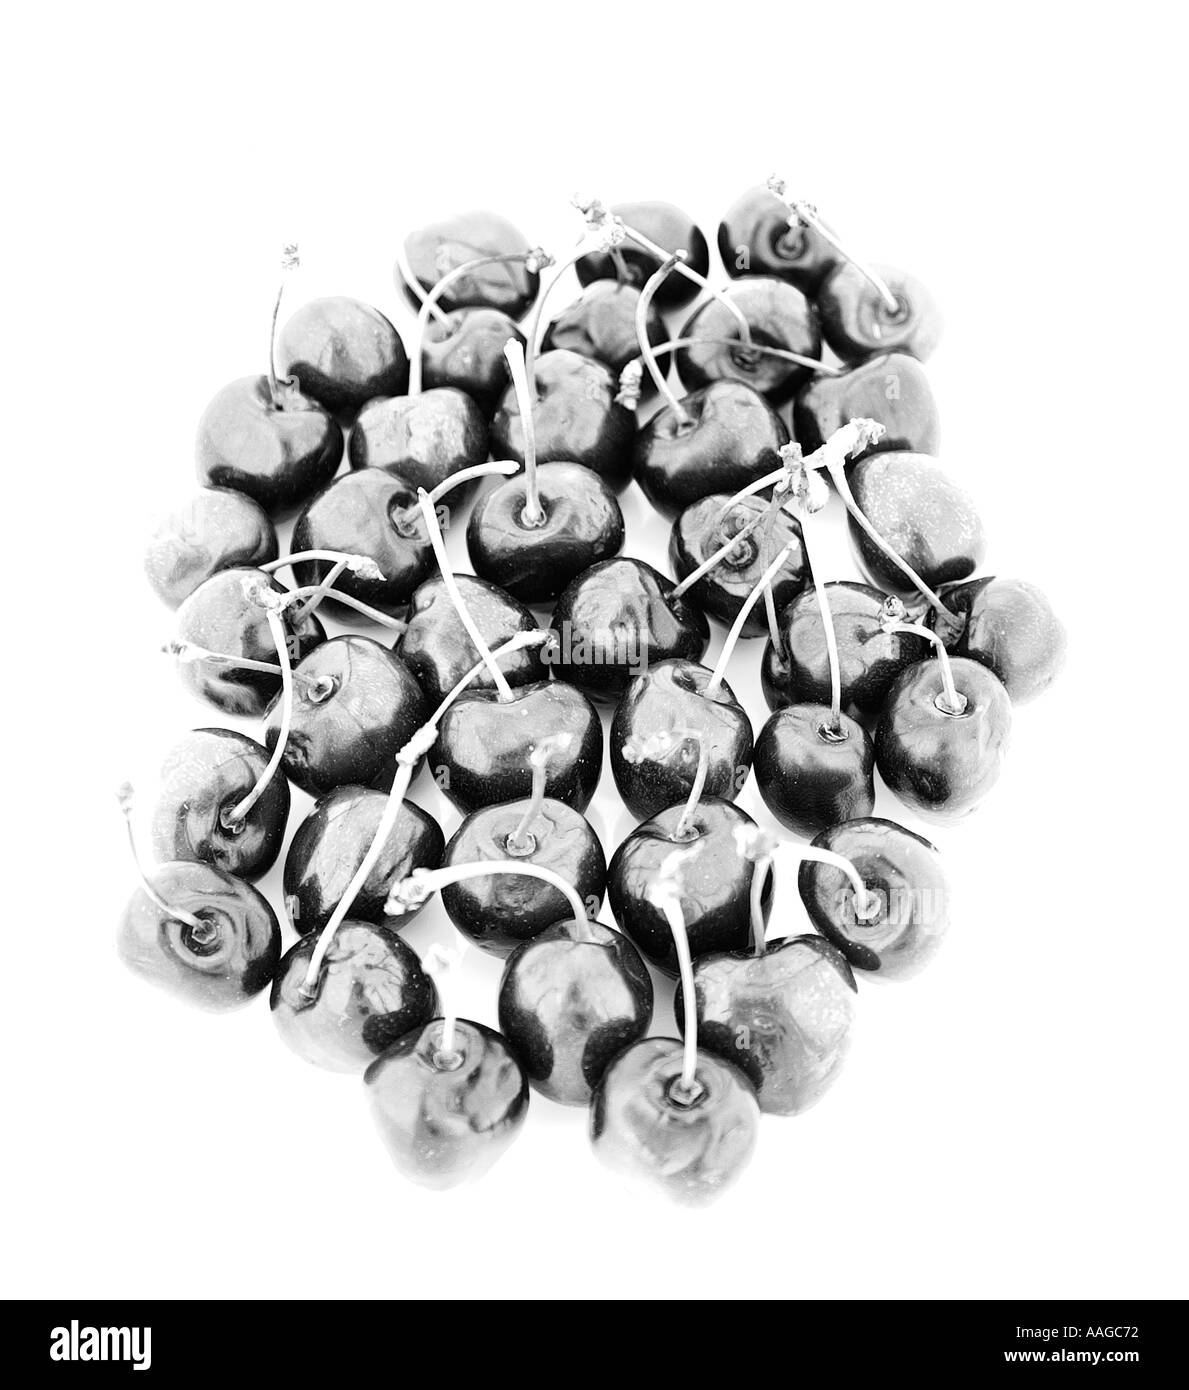 black and white pile of cherries Stock Photo